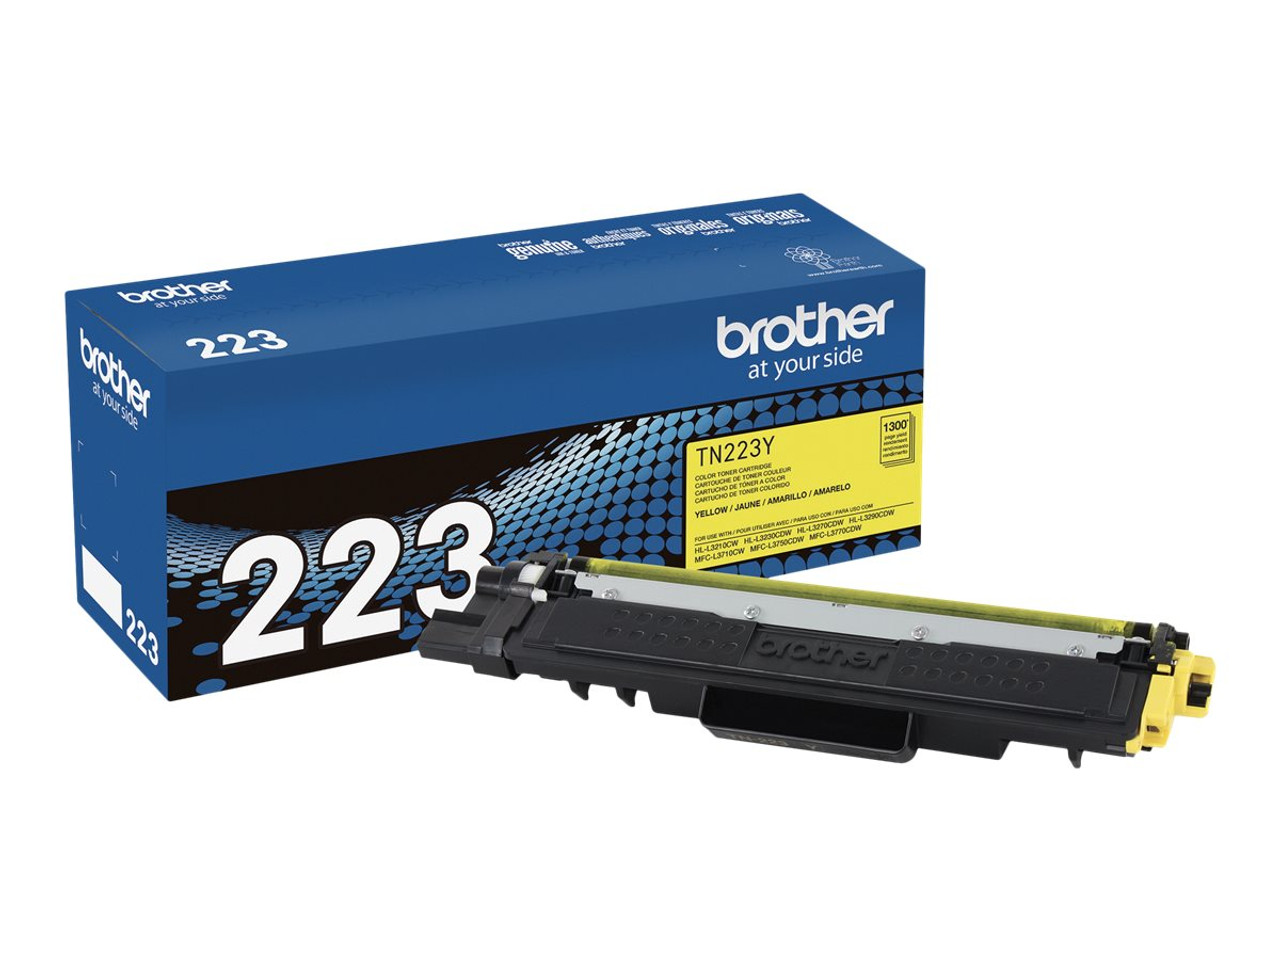 Brother DCP-L 3550 CDW Printer Toner Cartridges